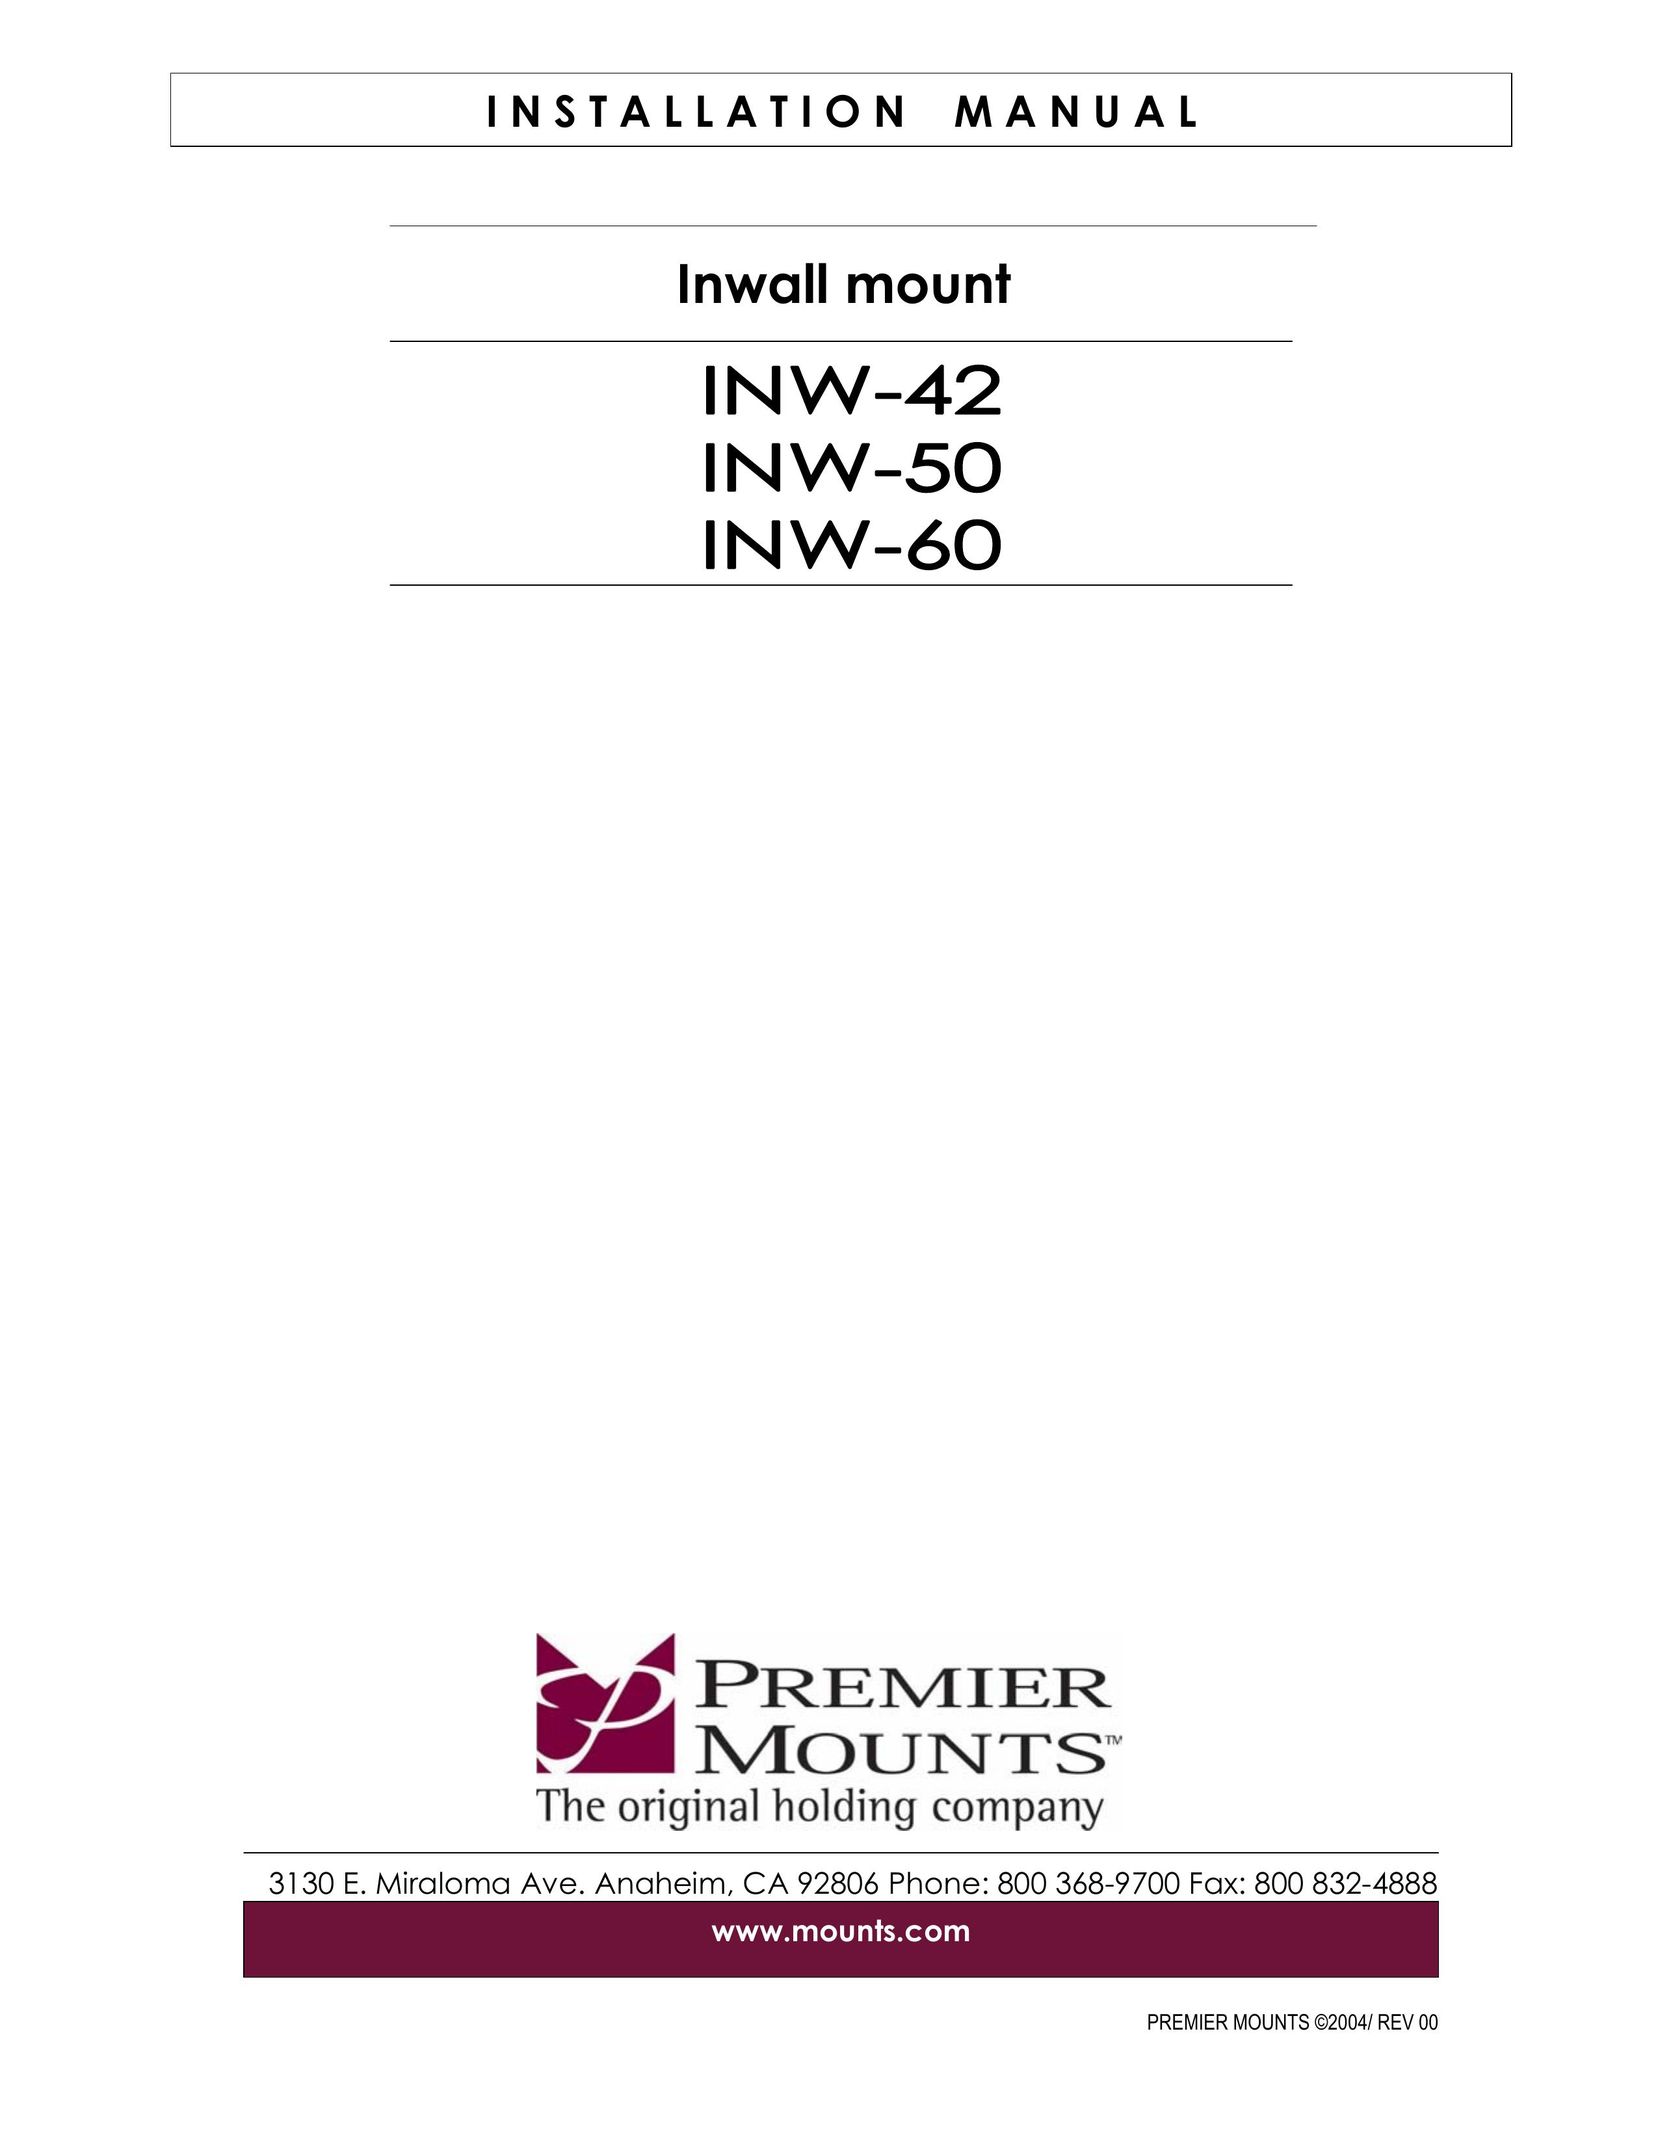 Premier Mounts INW-50 TV Mount User Manual